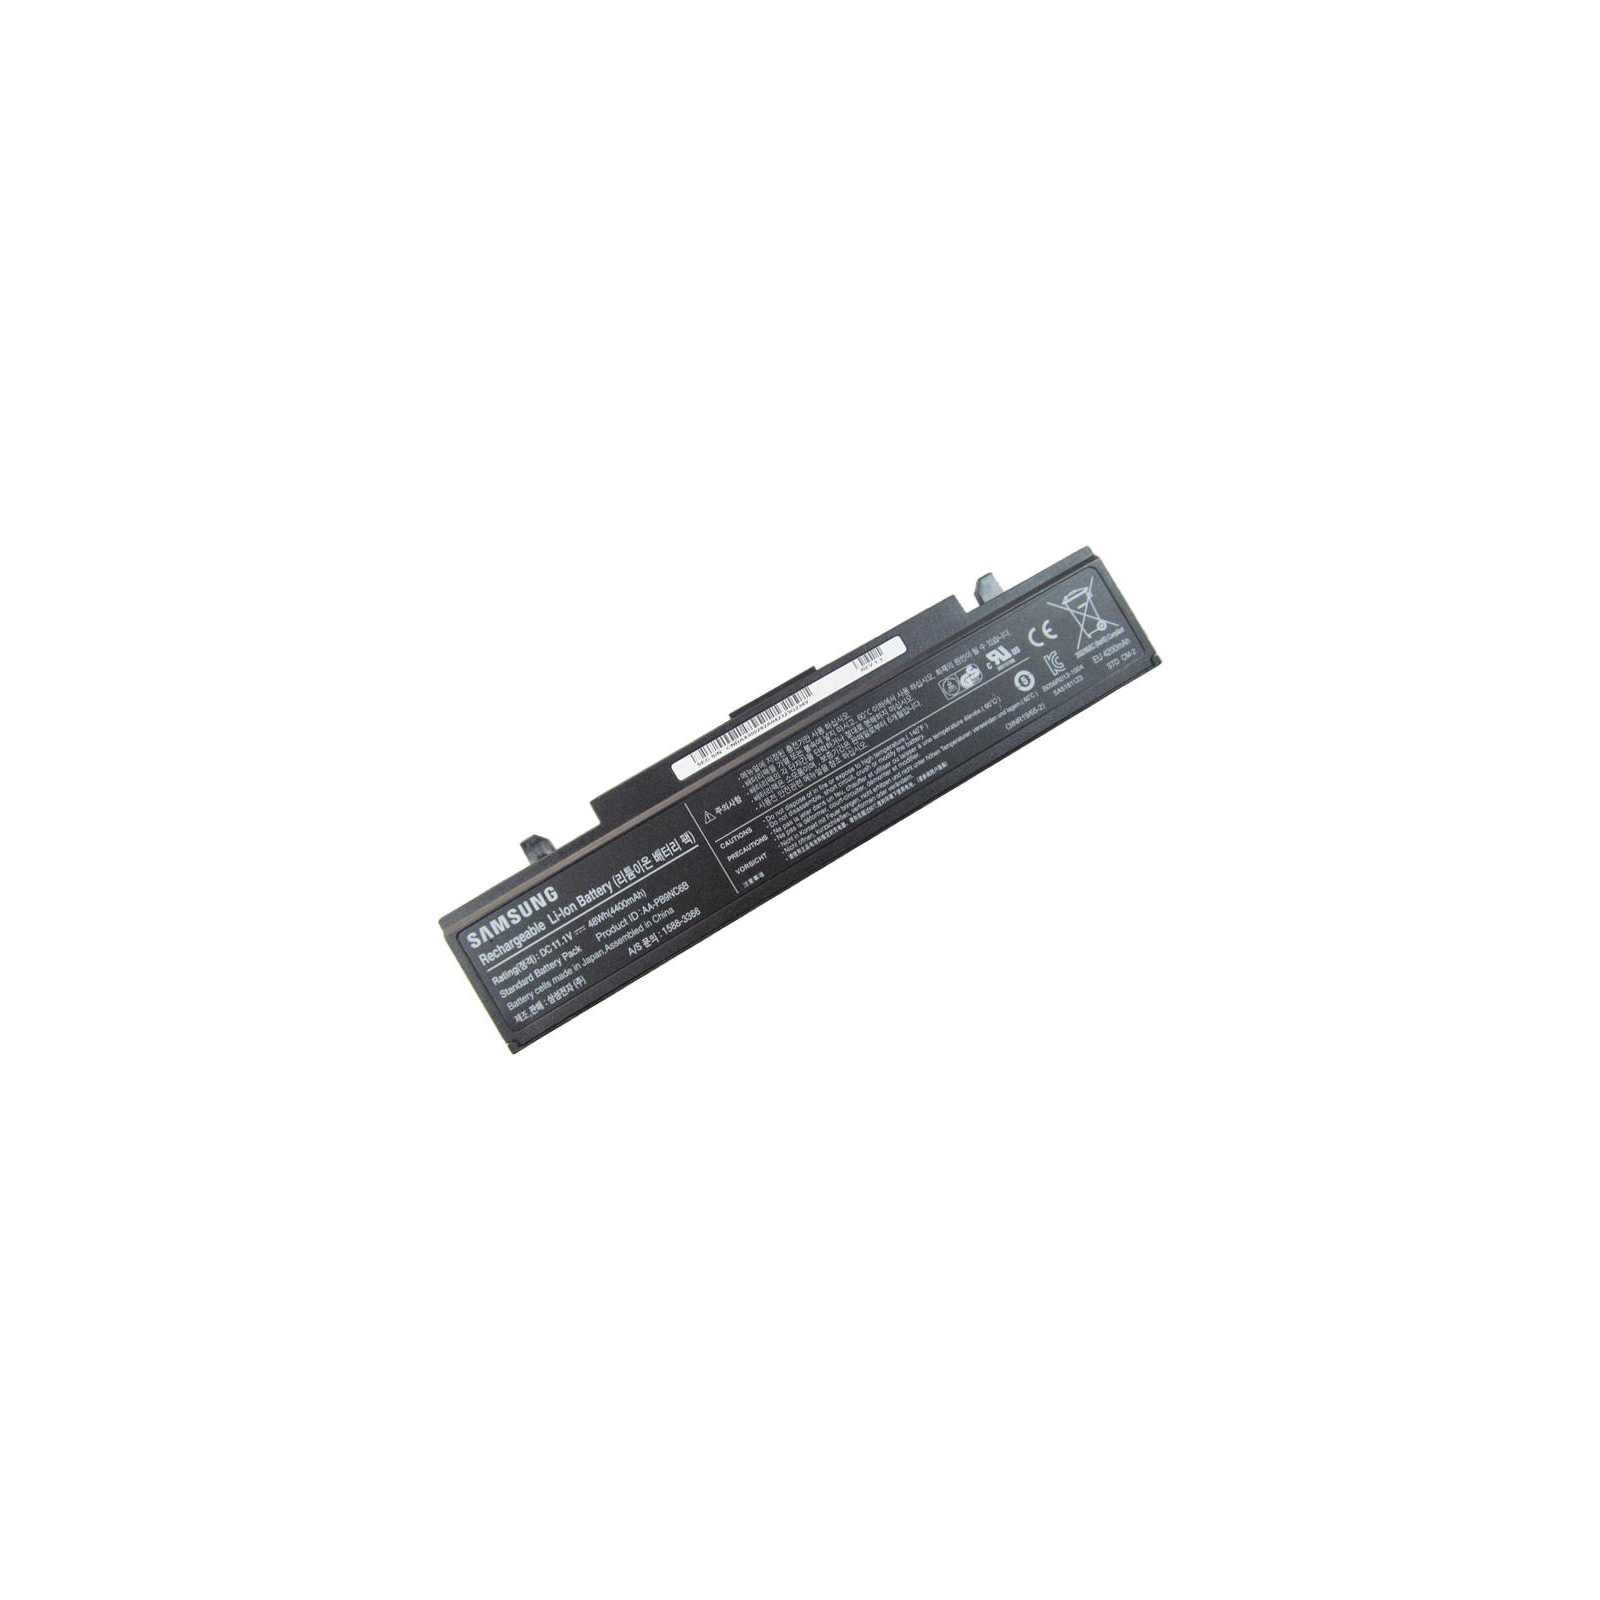 Аккумулятор для ноутбука Samsung R428 AA-PB9NS6B 4400mAh 6cell 11.1V Li-ion (A41606) изображение 2